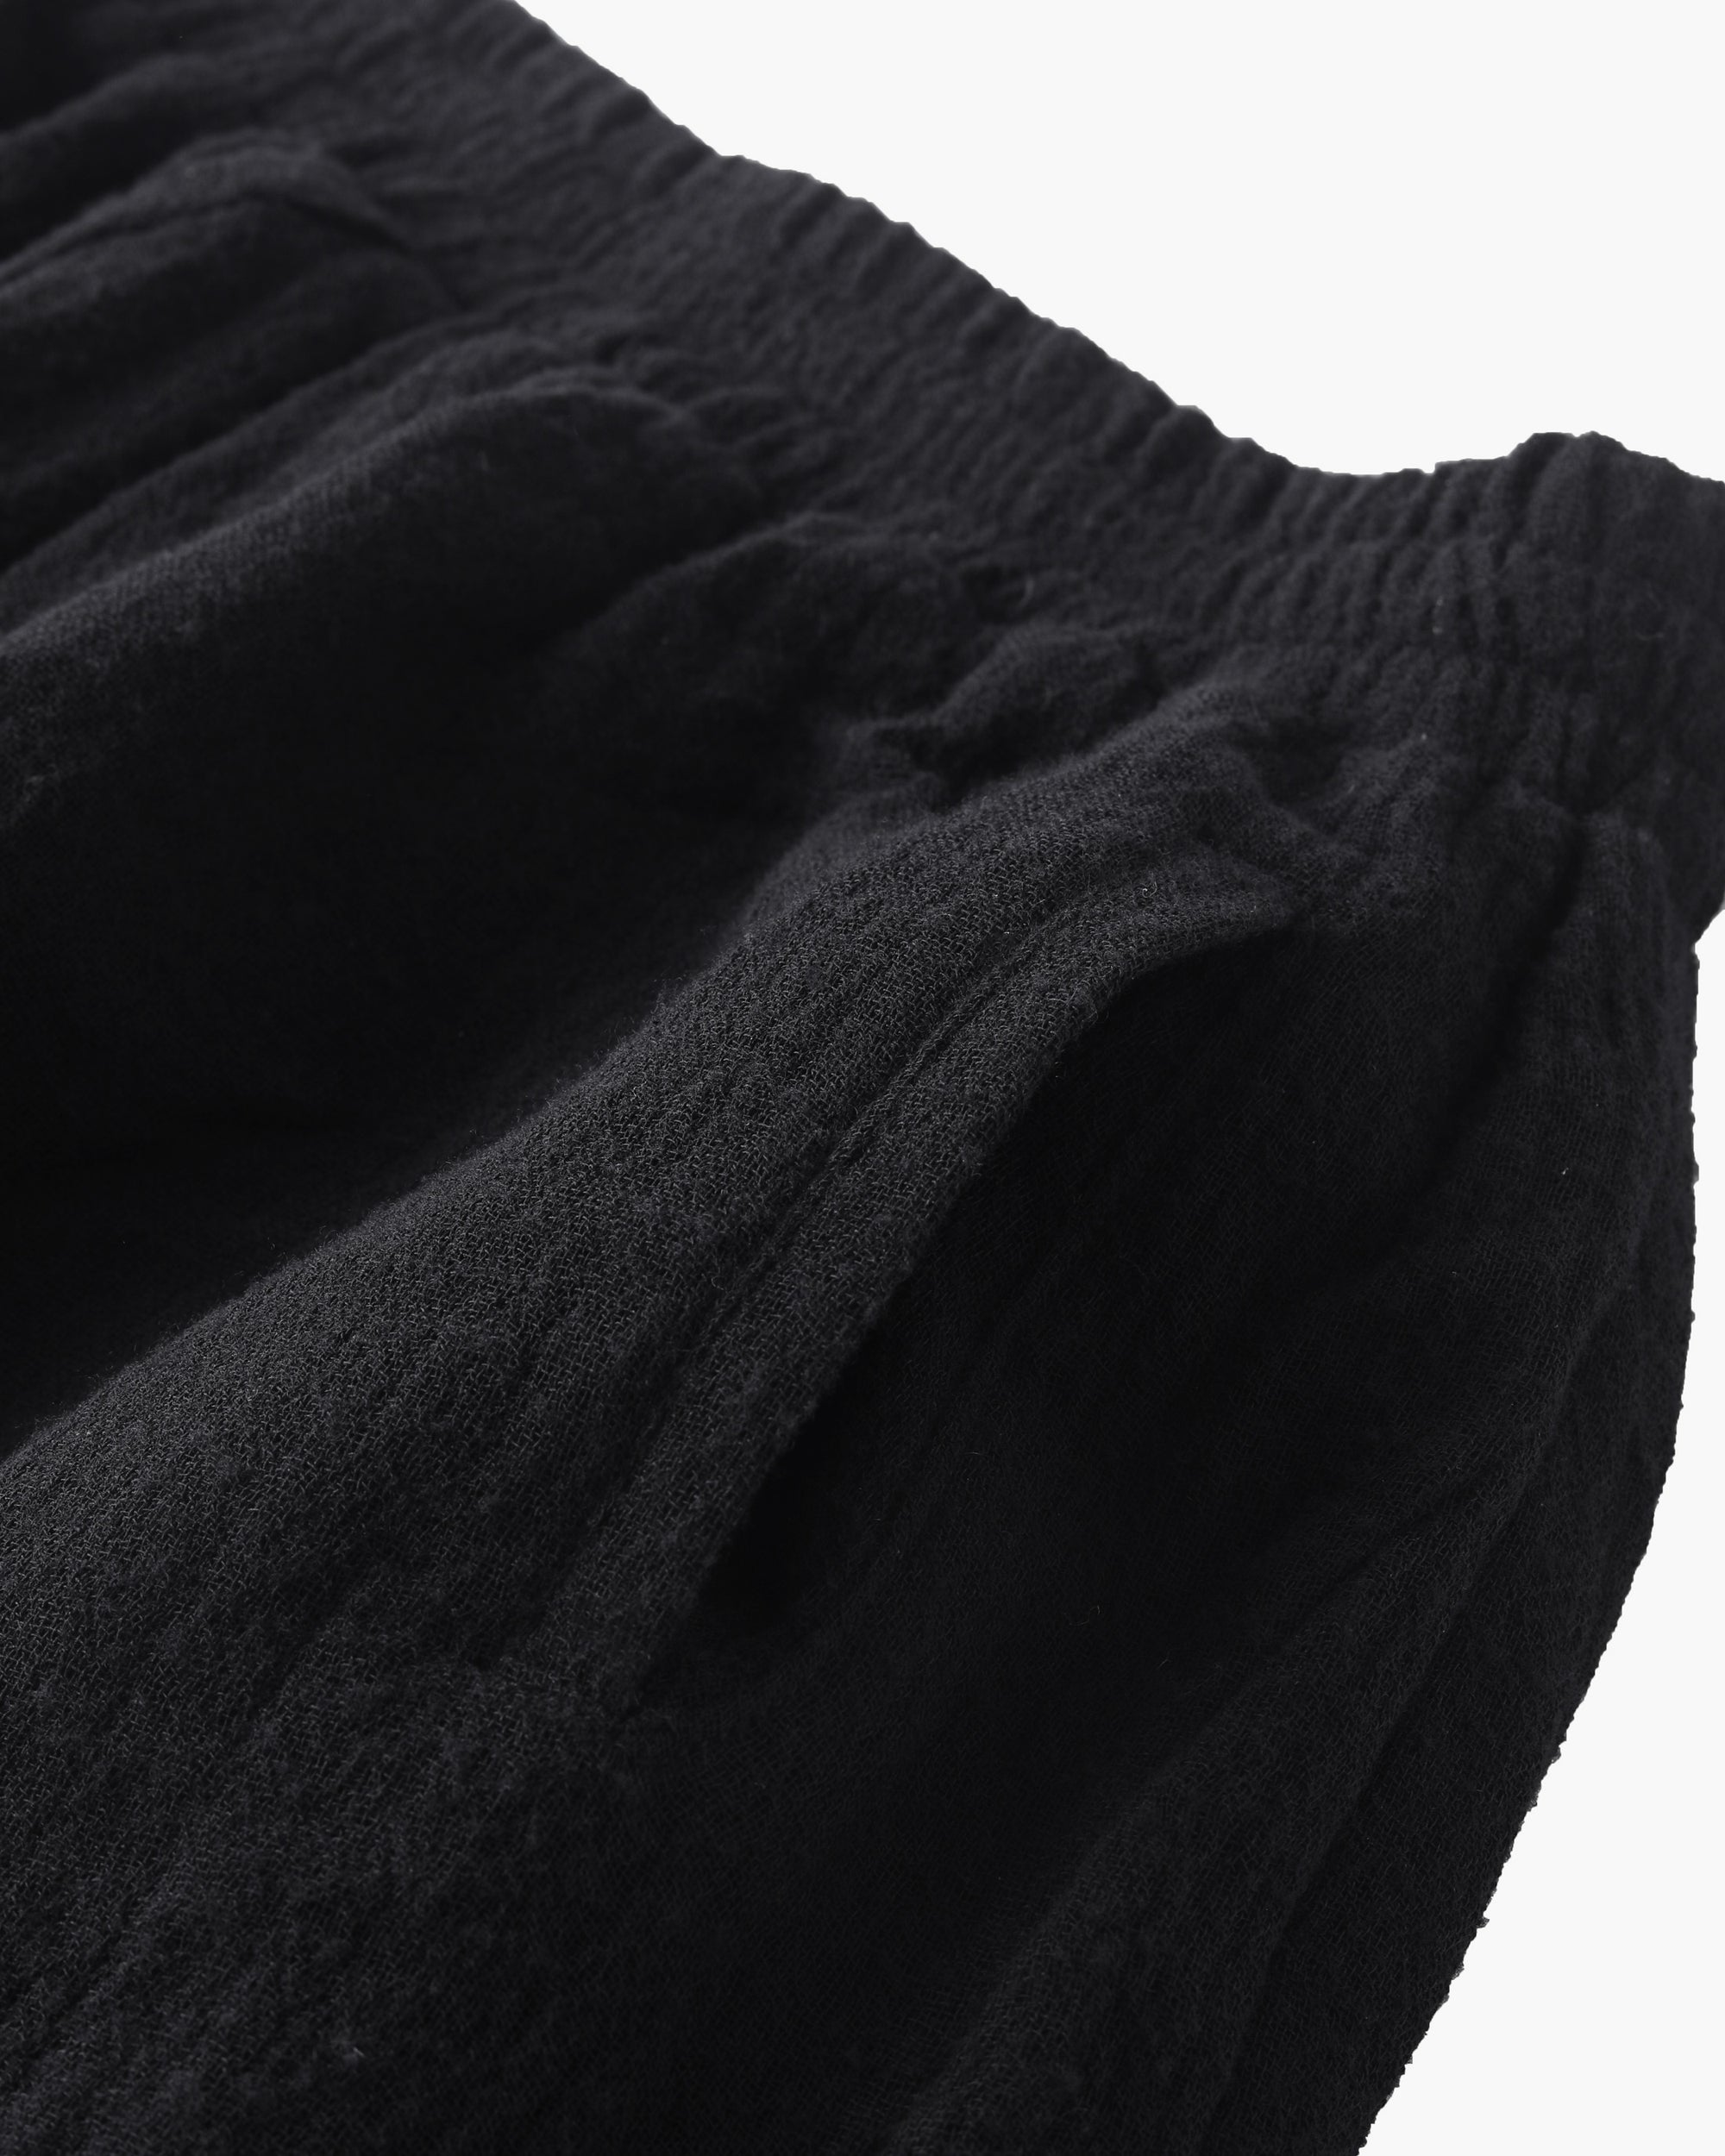 ROSEN Classics O-Bi Trousers in Wool Gauze